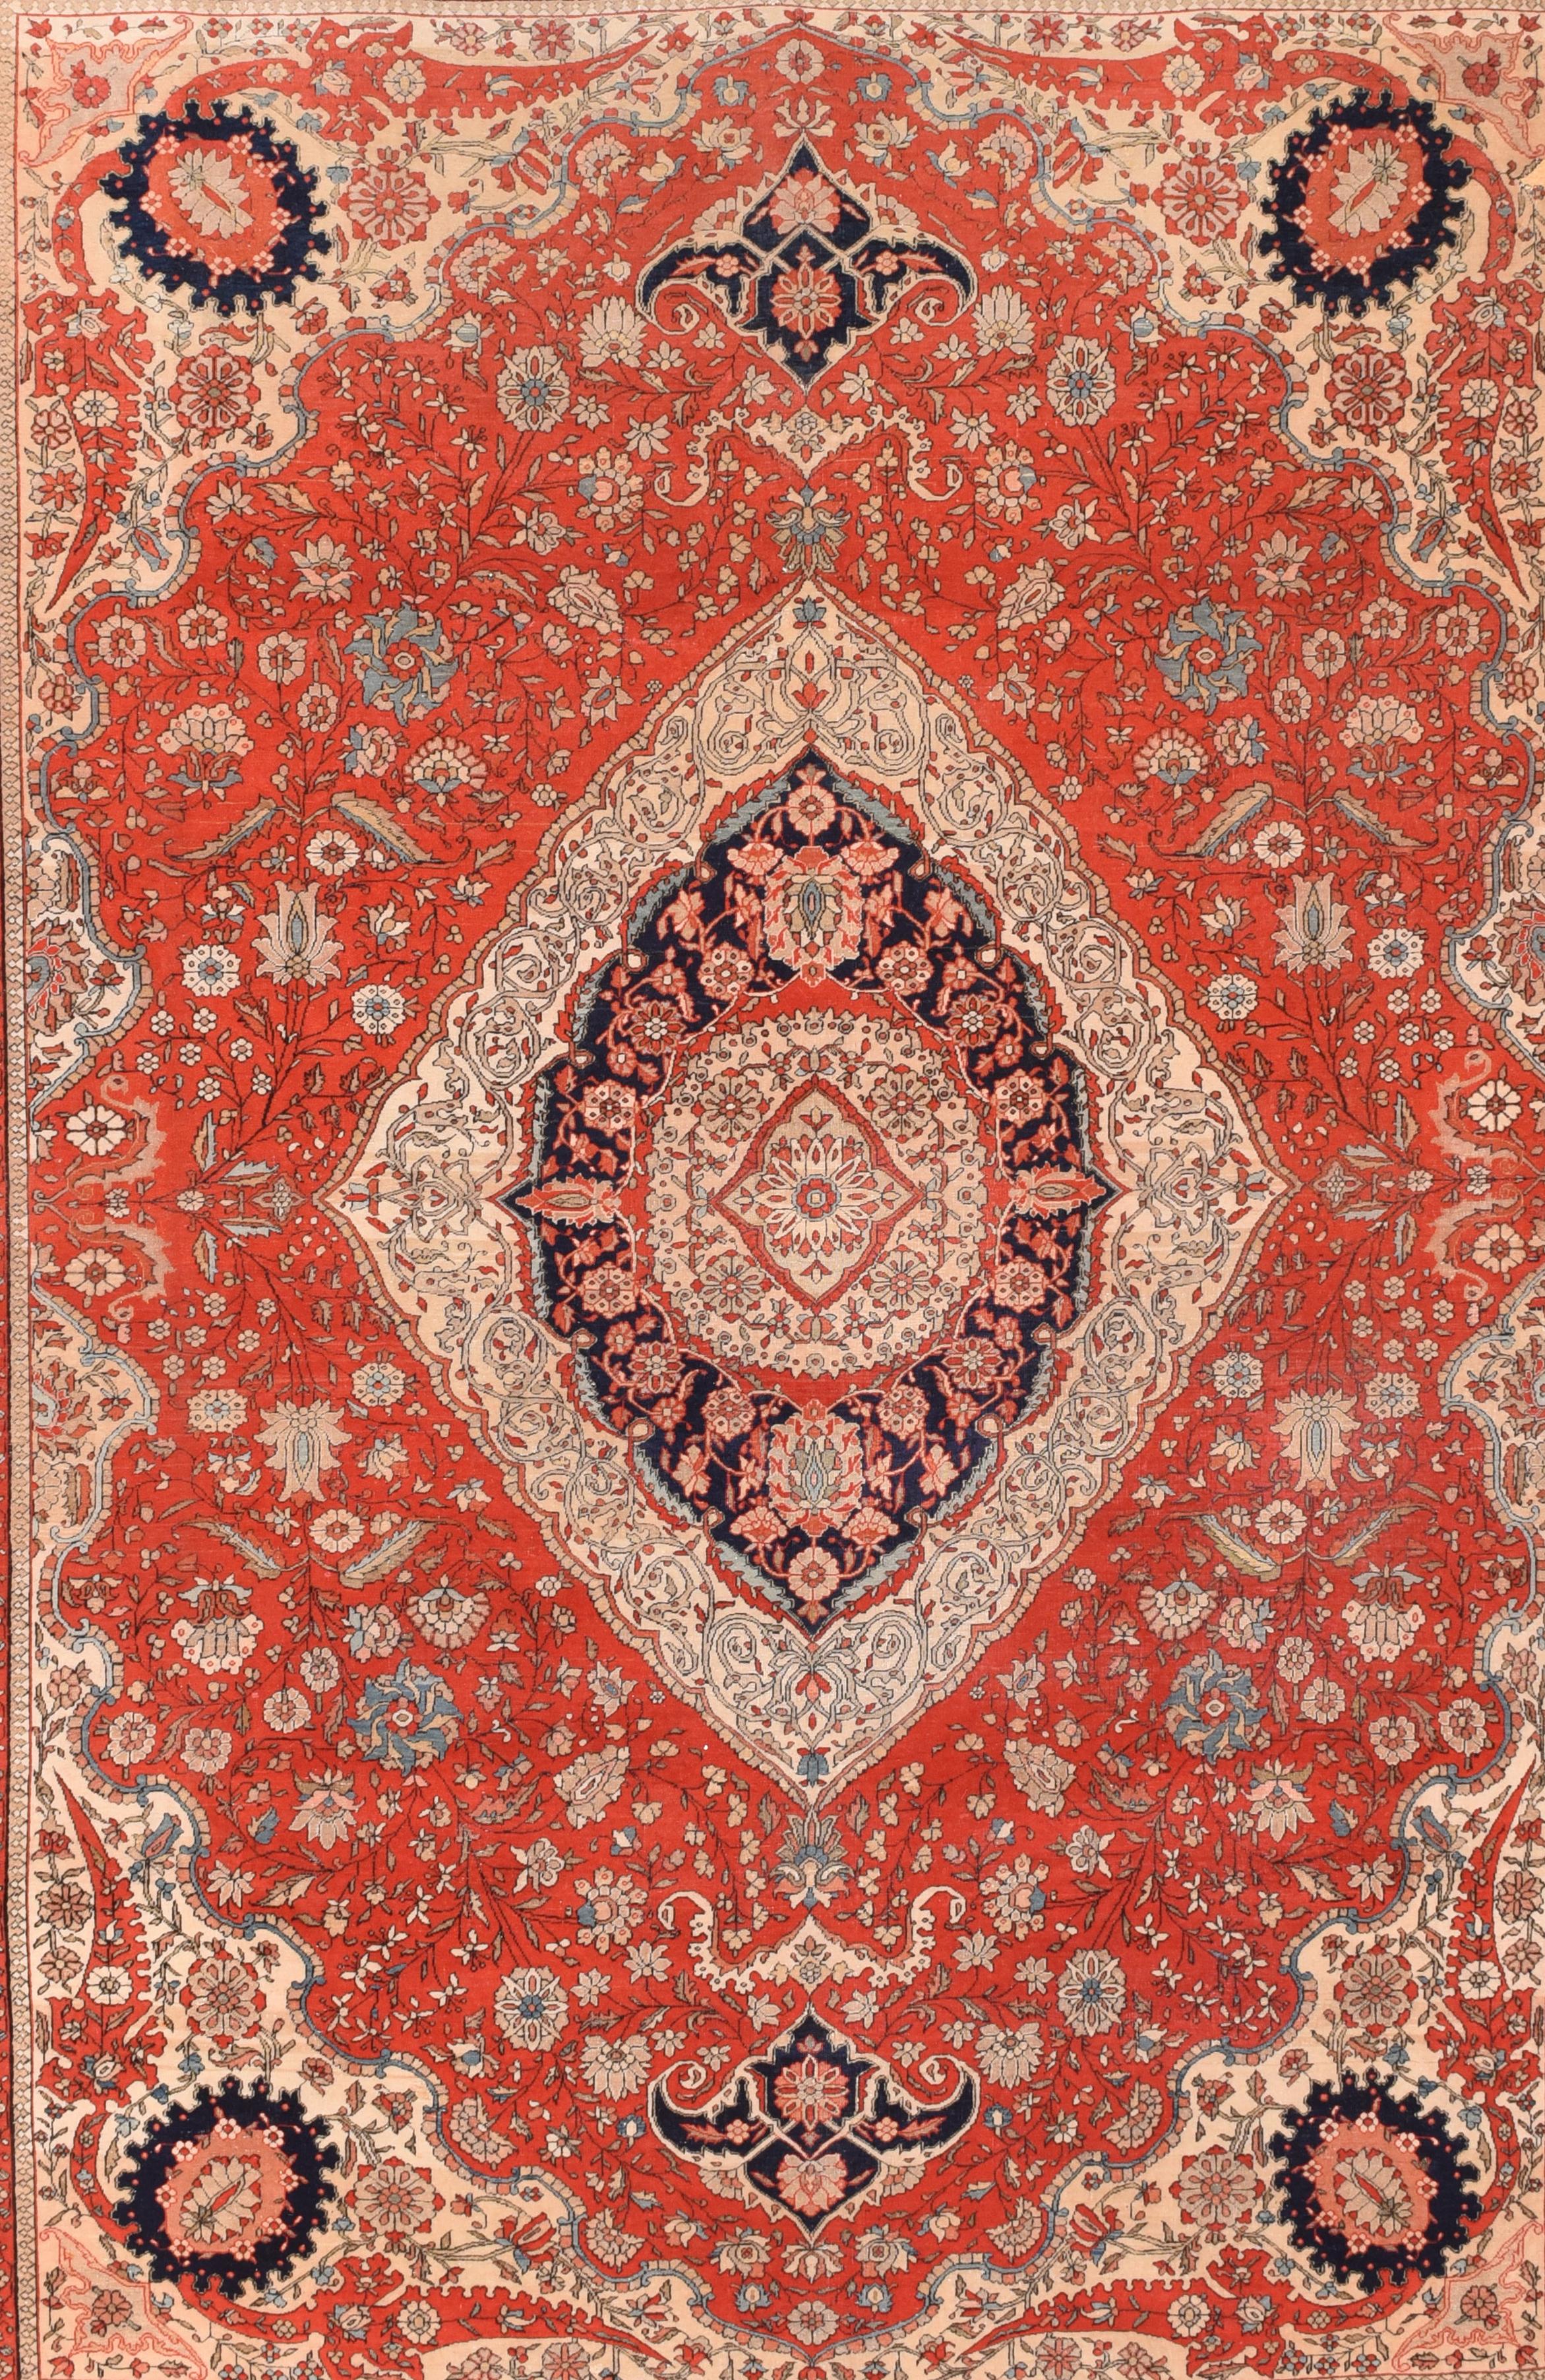 Antique handmade Mohtasham Kashan Persian rug.
 